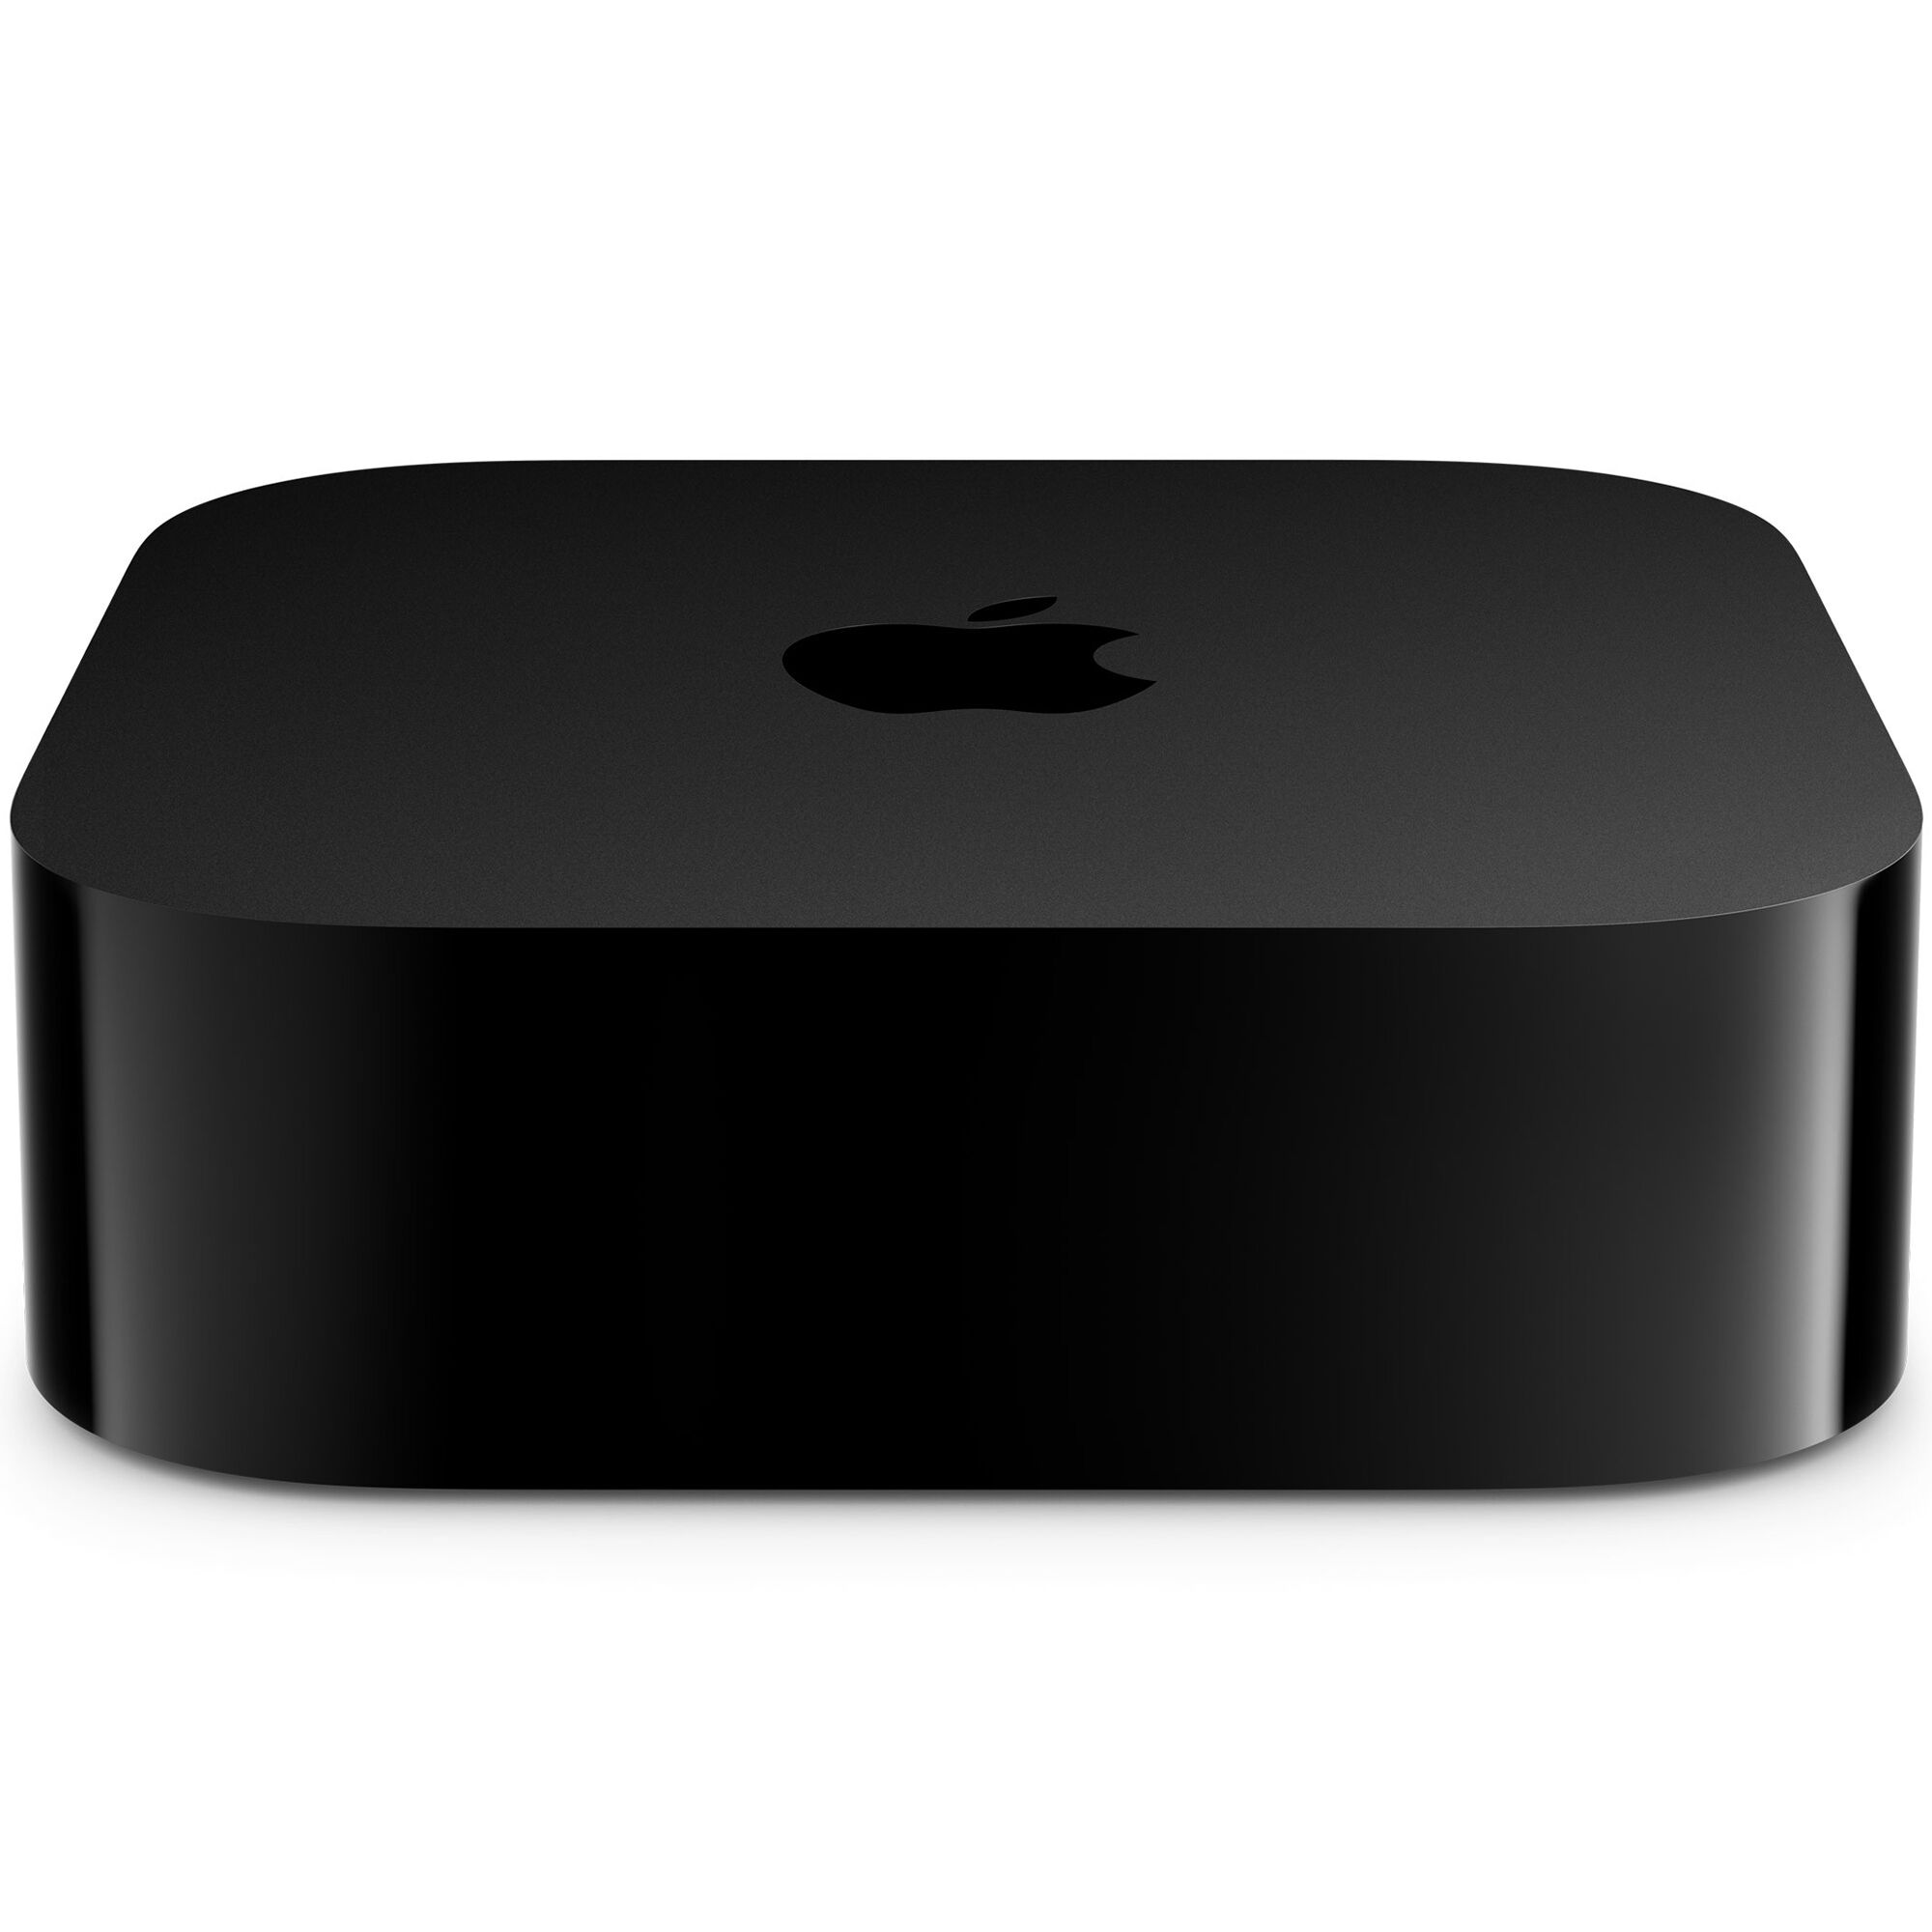 Apple TV 4K, 64GB, Wifi | P.C. Richard & Son